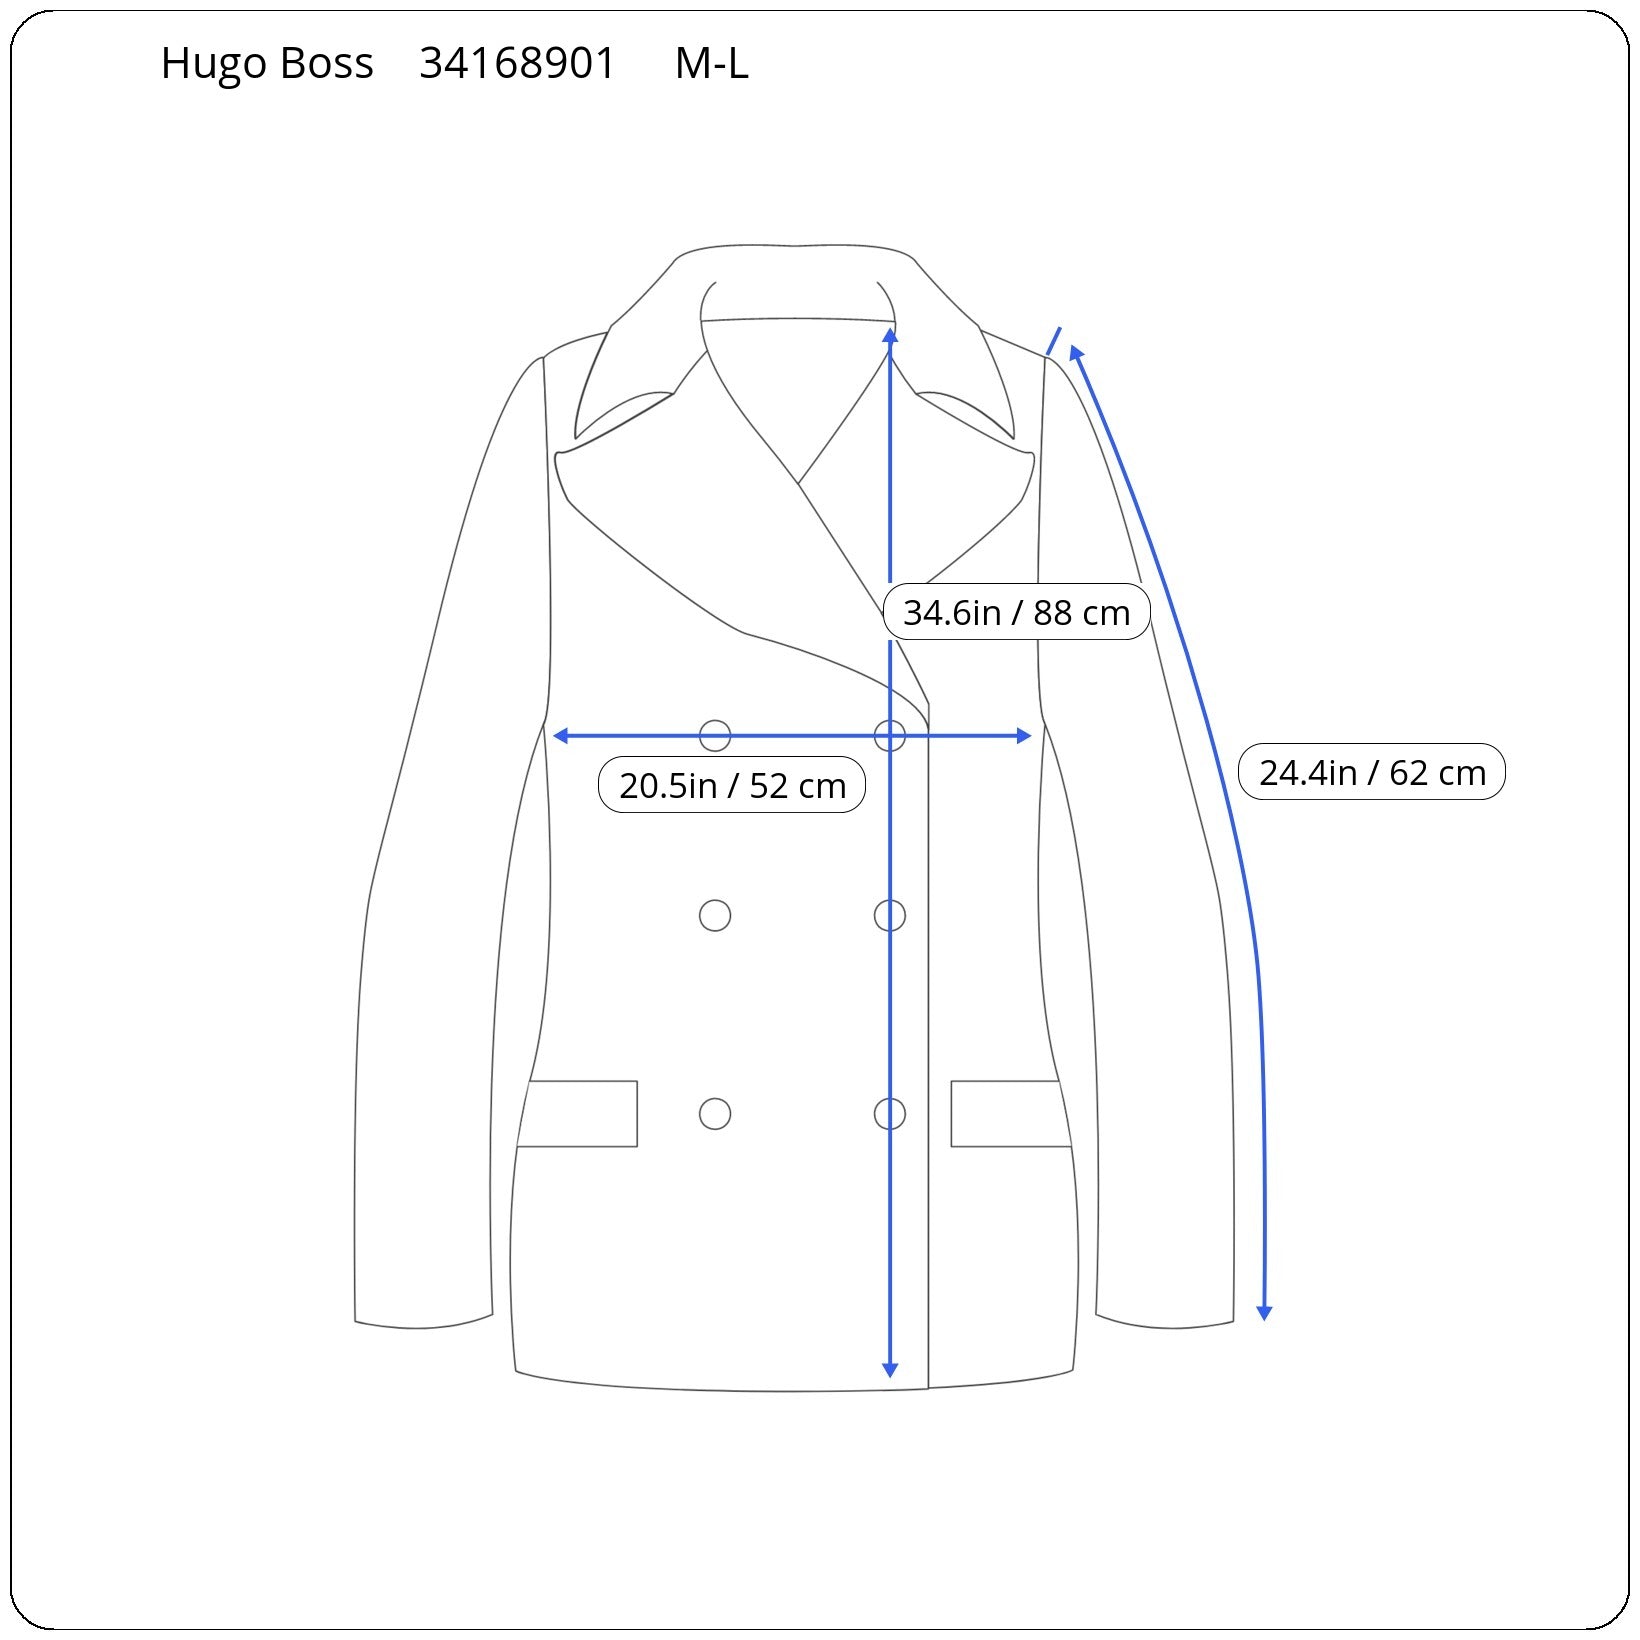 Vintage Hugo Boss Brown Wool Blend Double Breasted Cashmere Blazer Jacket Mens M